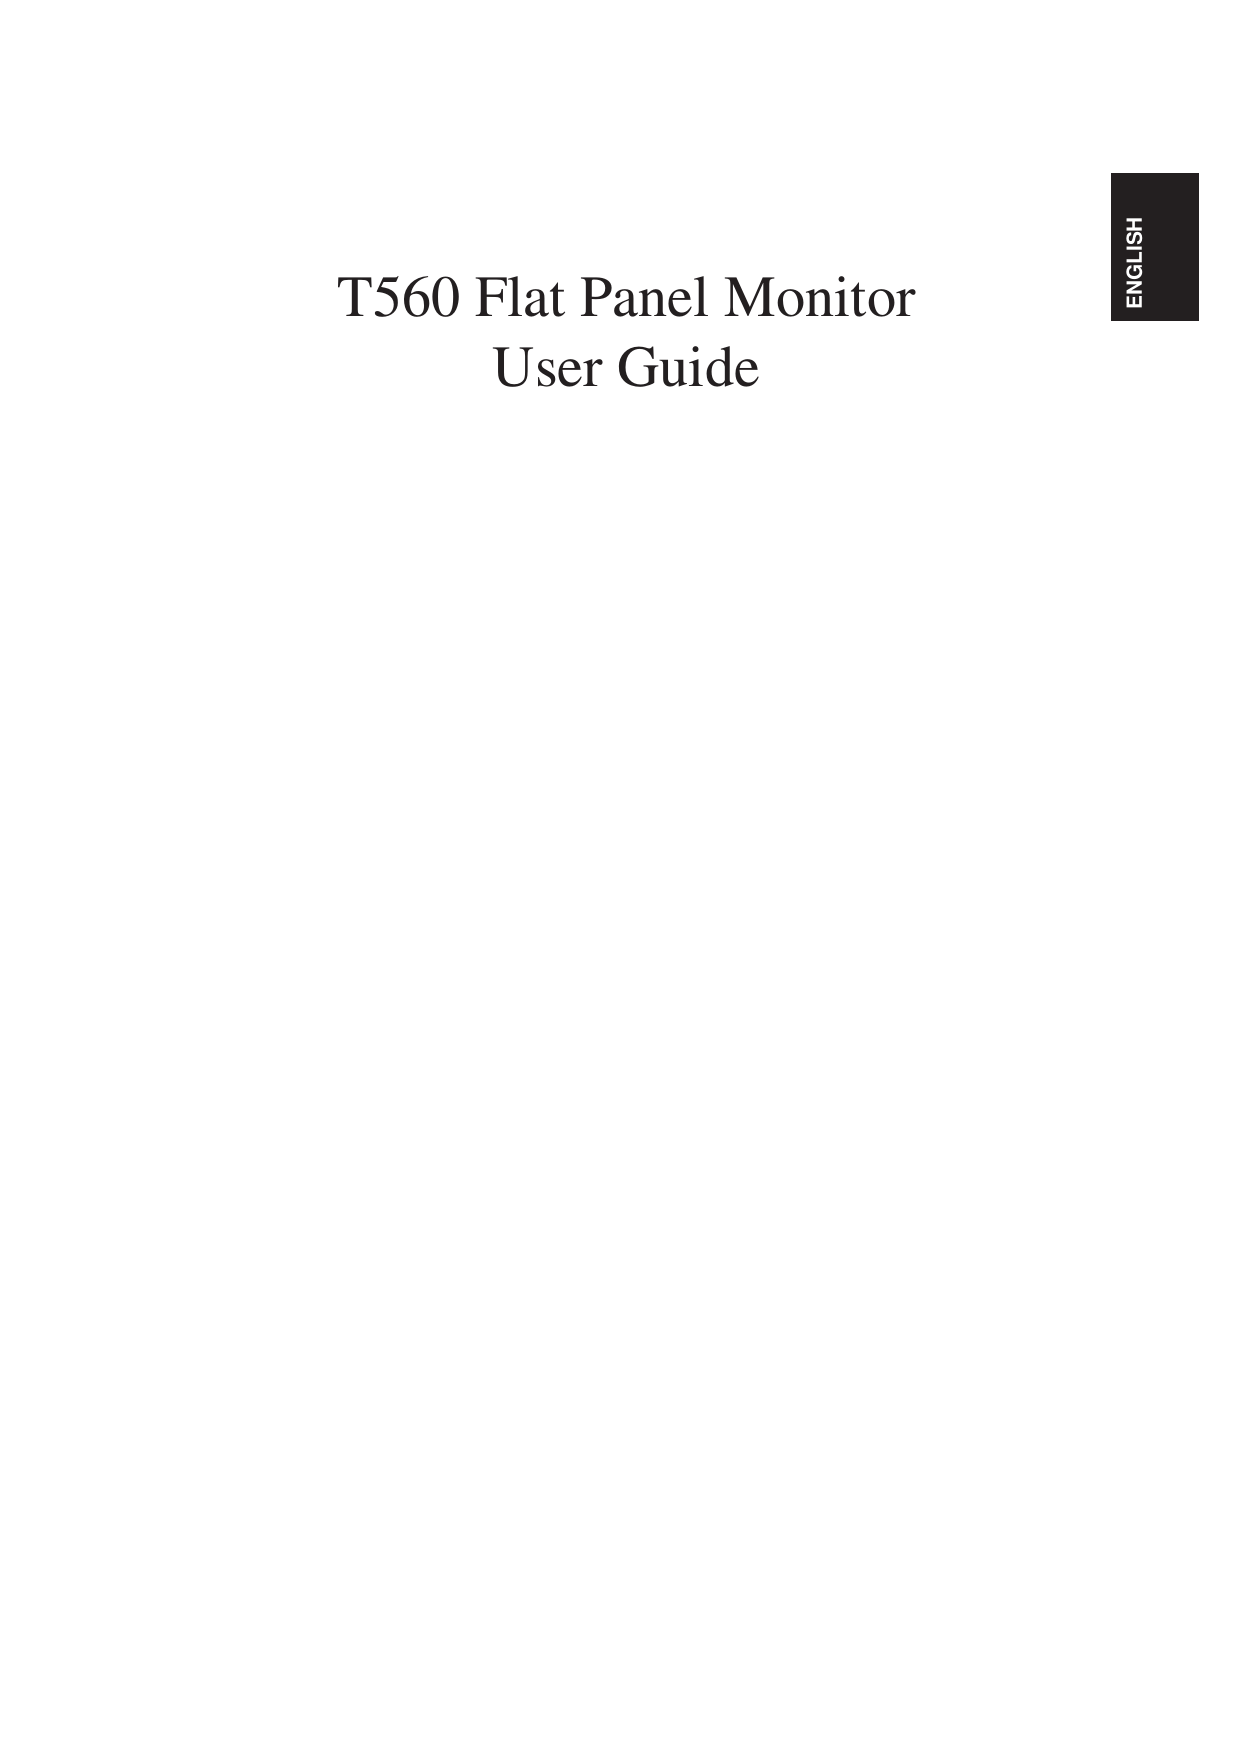 ENGLISHT560 Flat Panel MonitorUser Guide